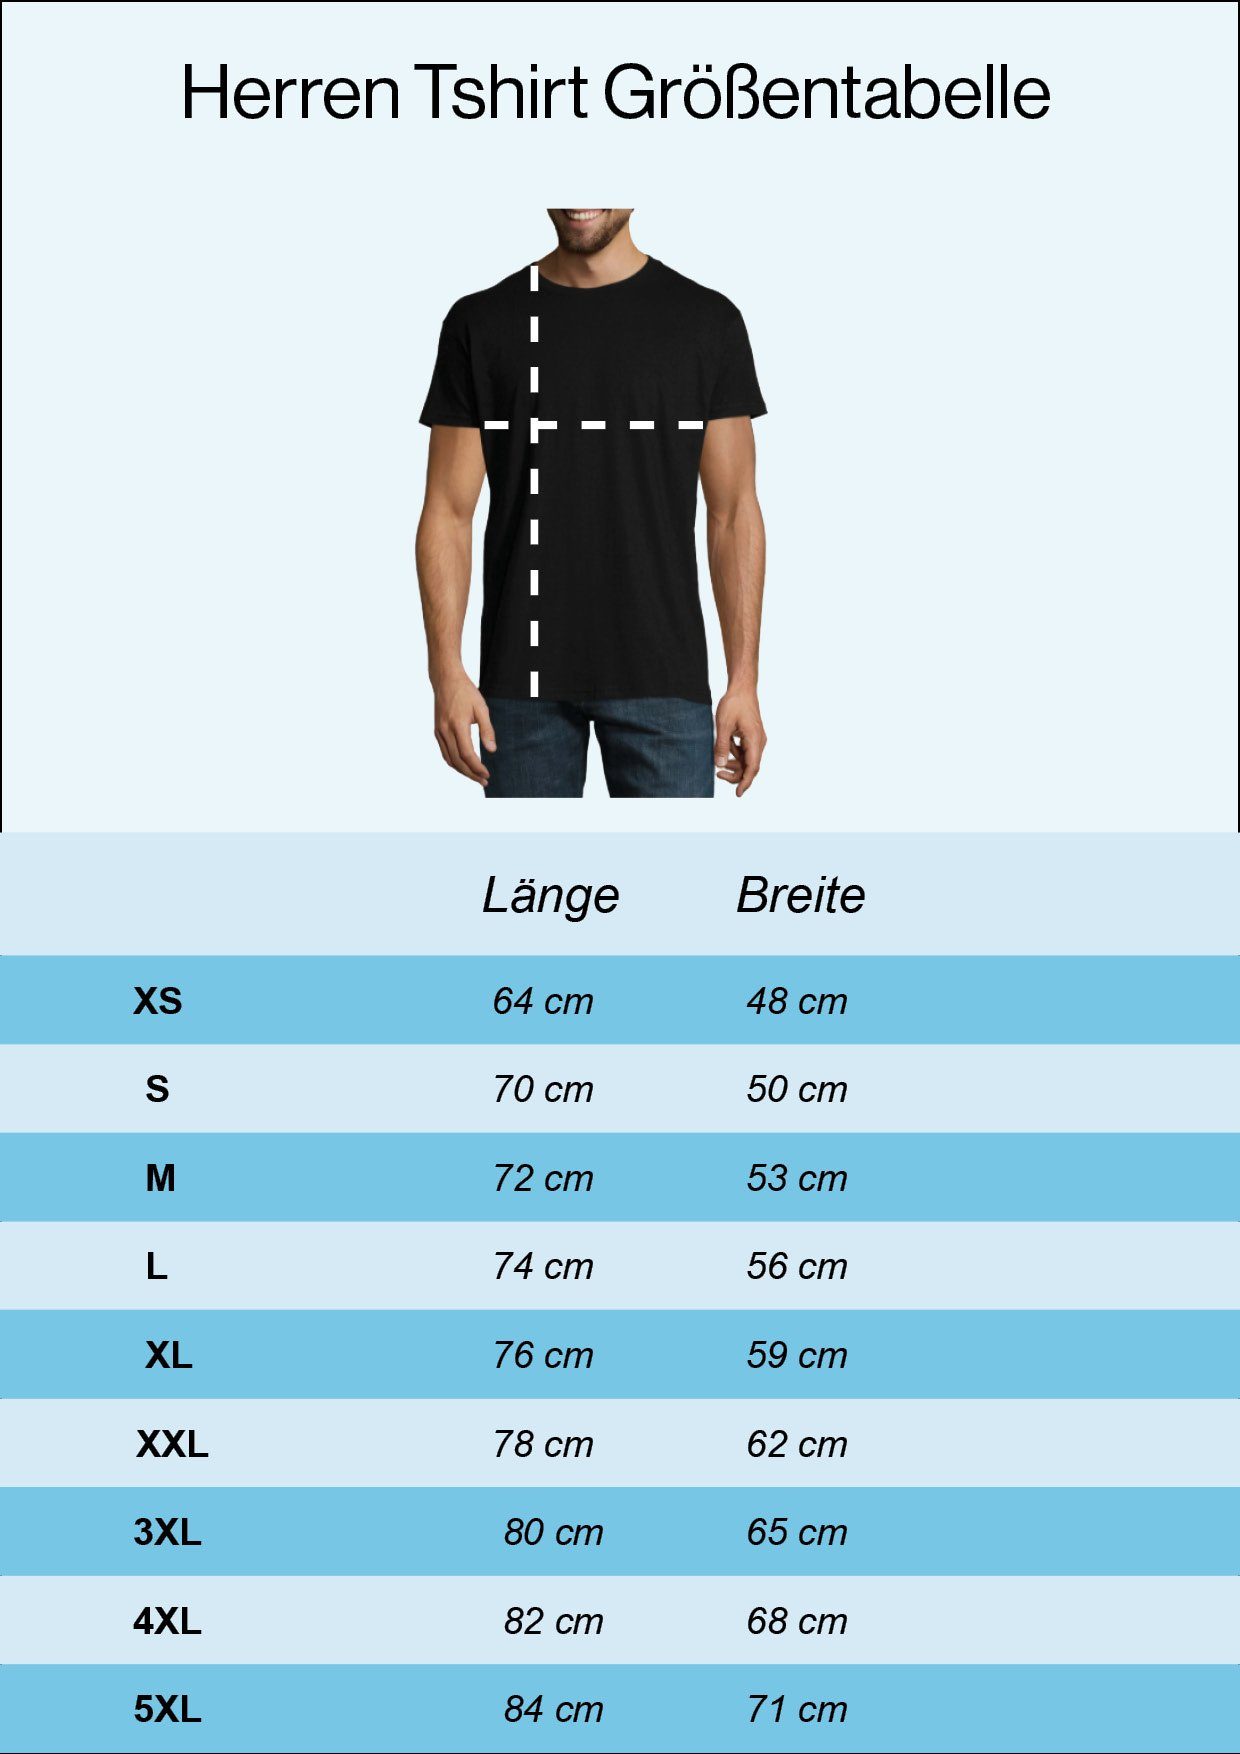 Youth Designz T-Shirt mit Navyblau Thai Herren Muay Shirt Frontprint Boxen trendigem